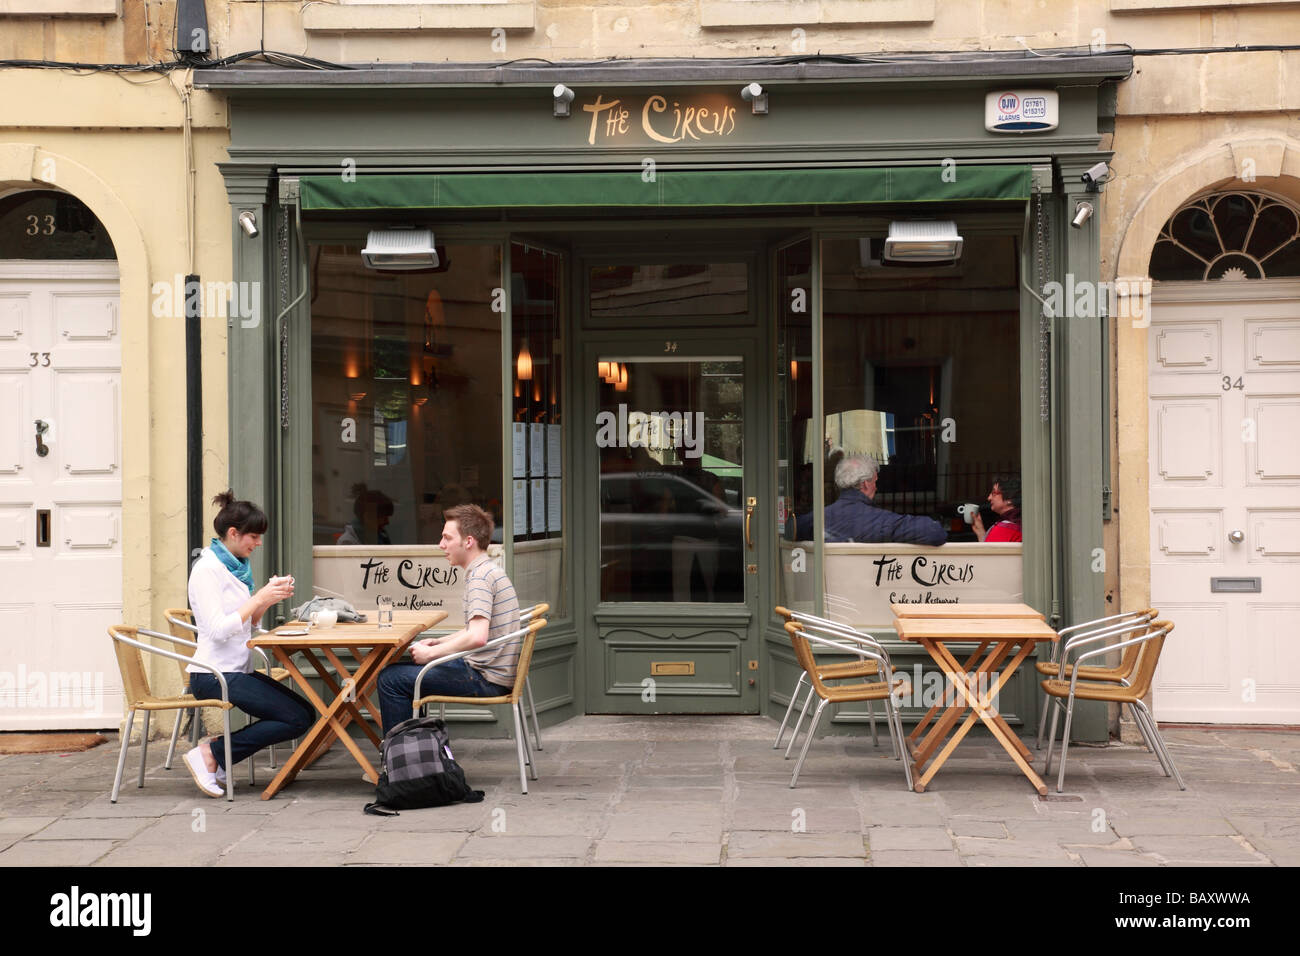 The Circus Cafe and Restaurant, Brock Street, Bath, Somerset, England, UK Stockfoto